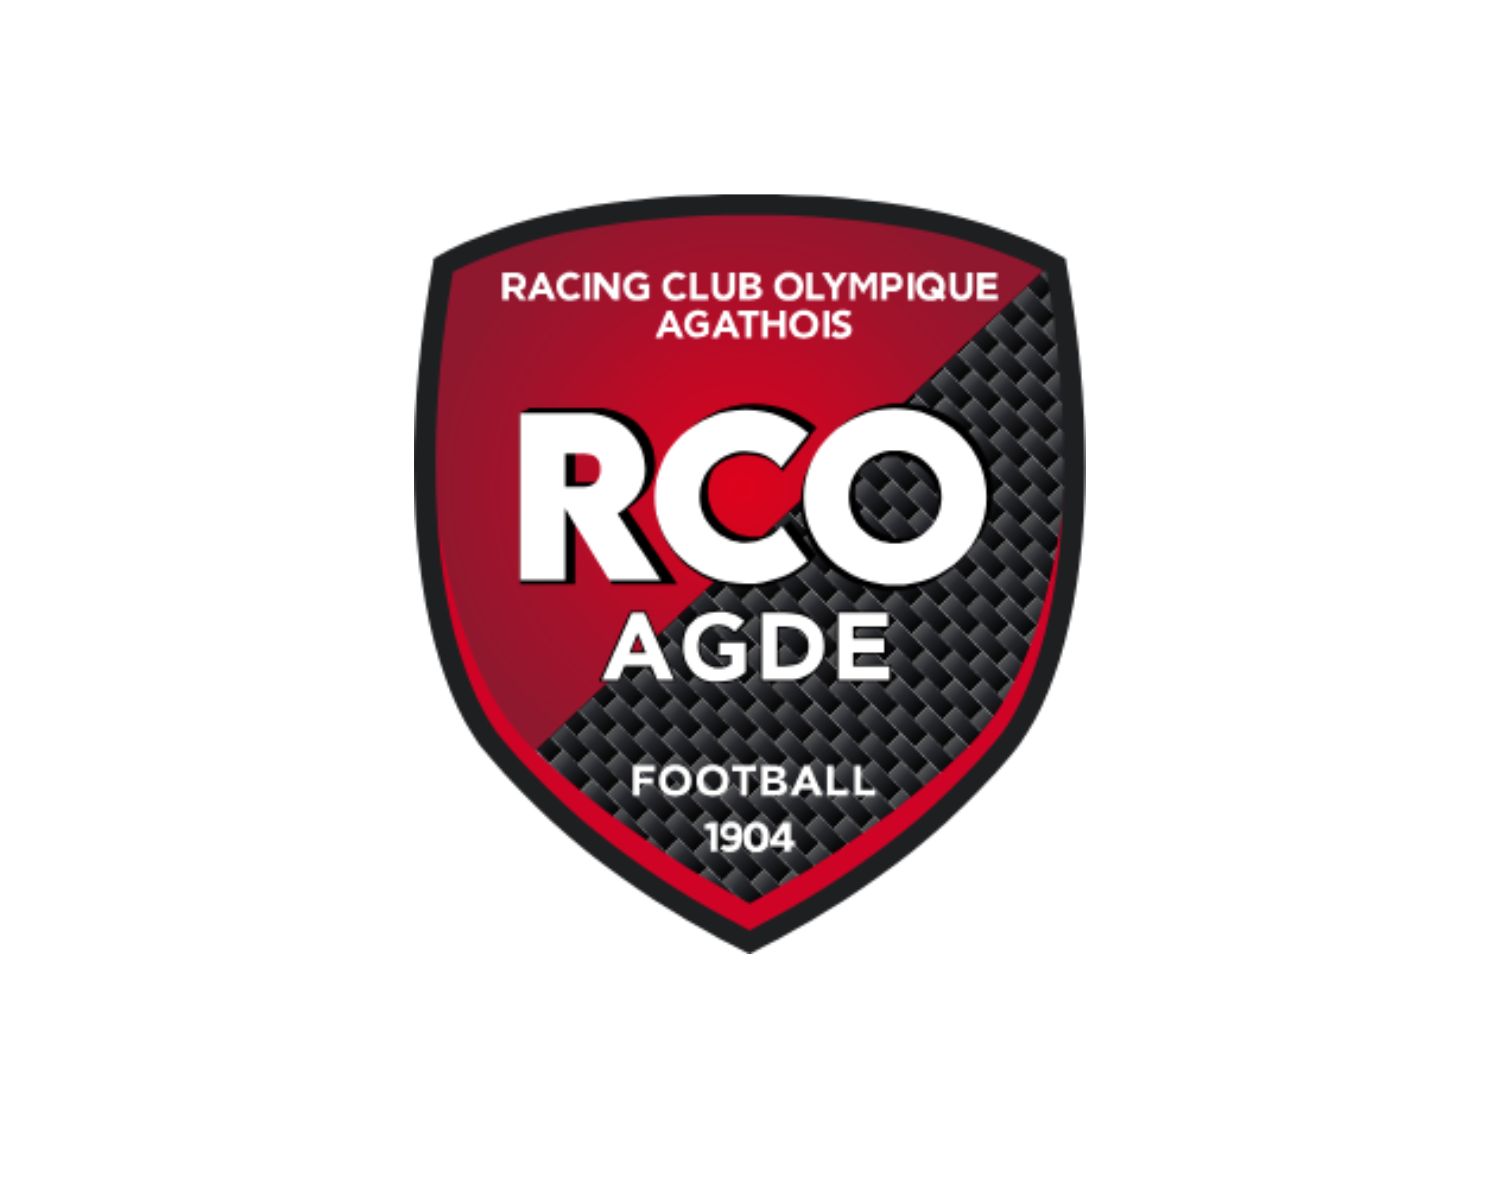 rco-agde-12-football-club-facts